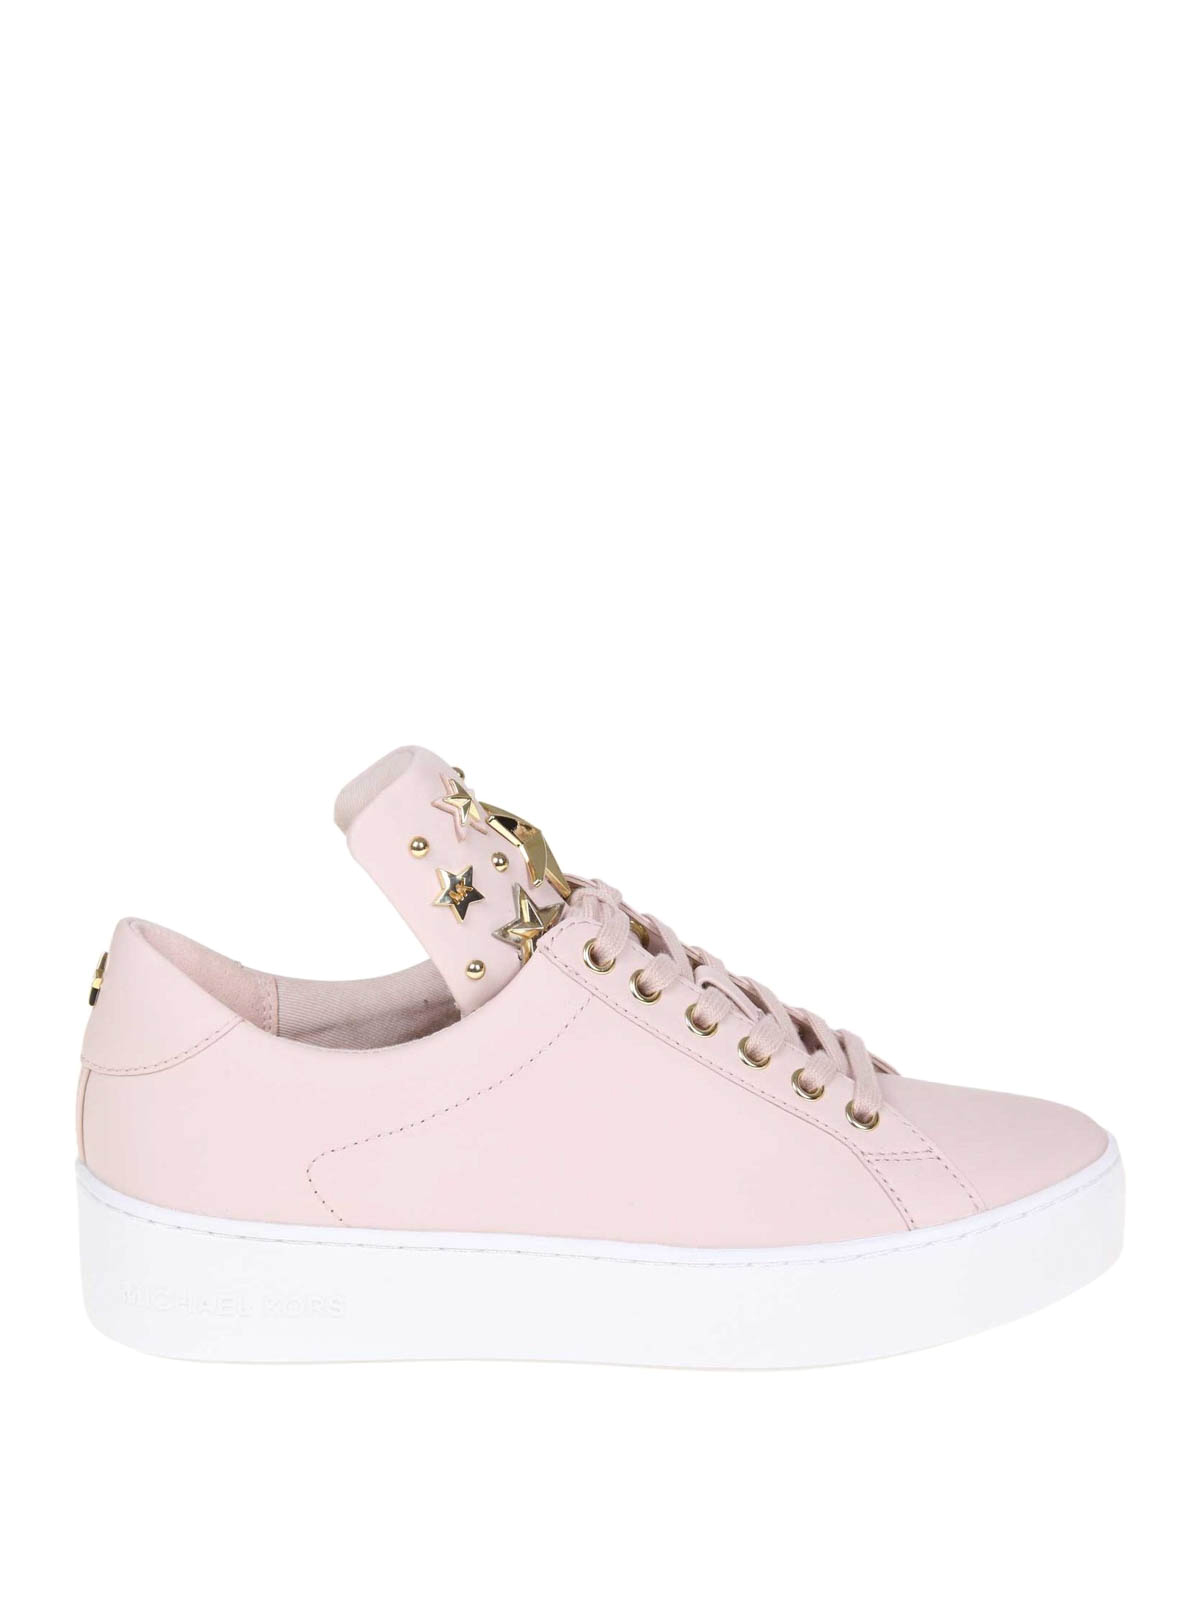 michael kors light pink shoes